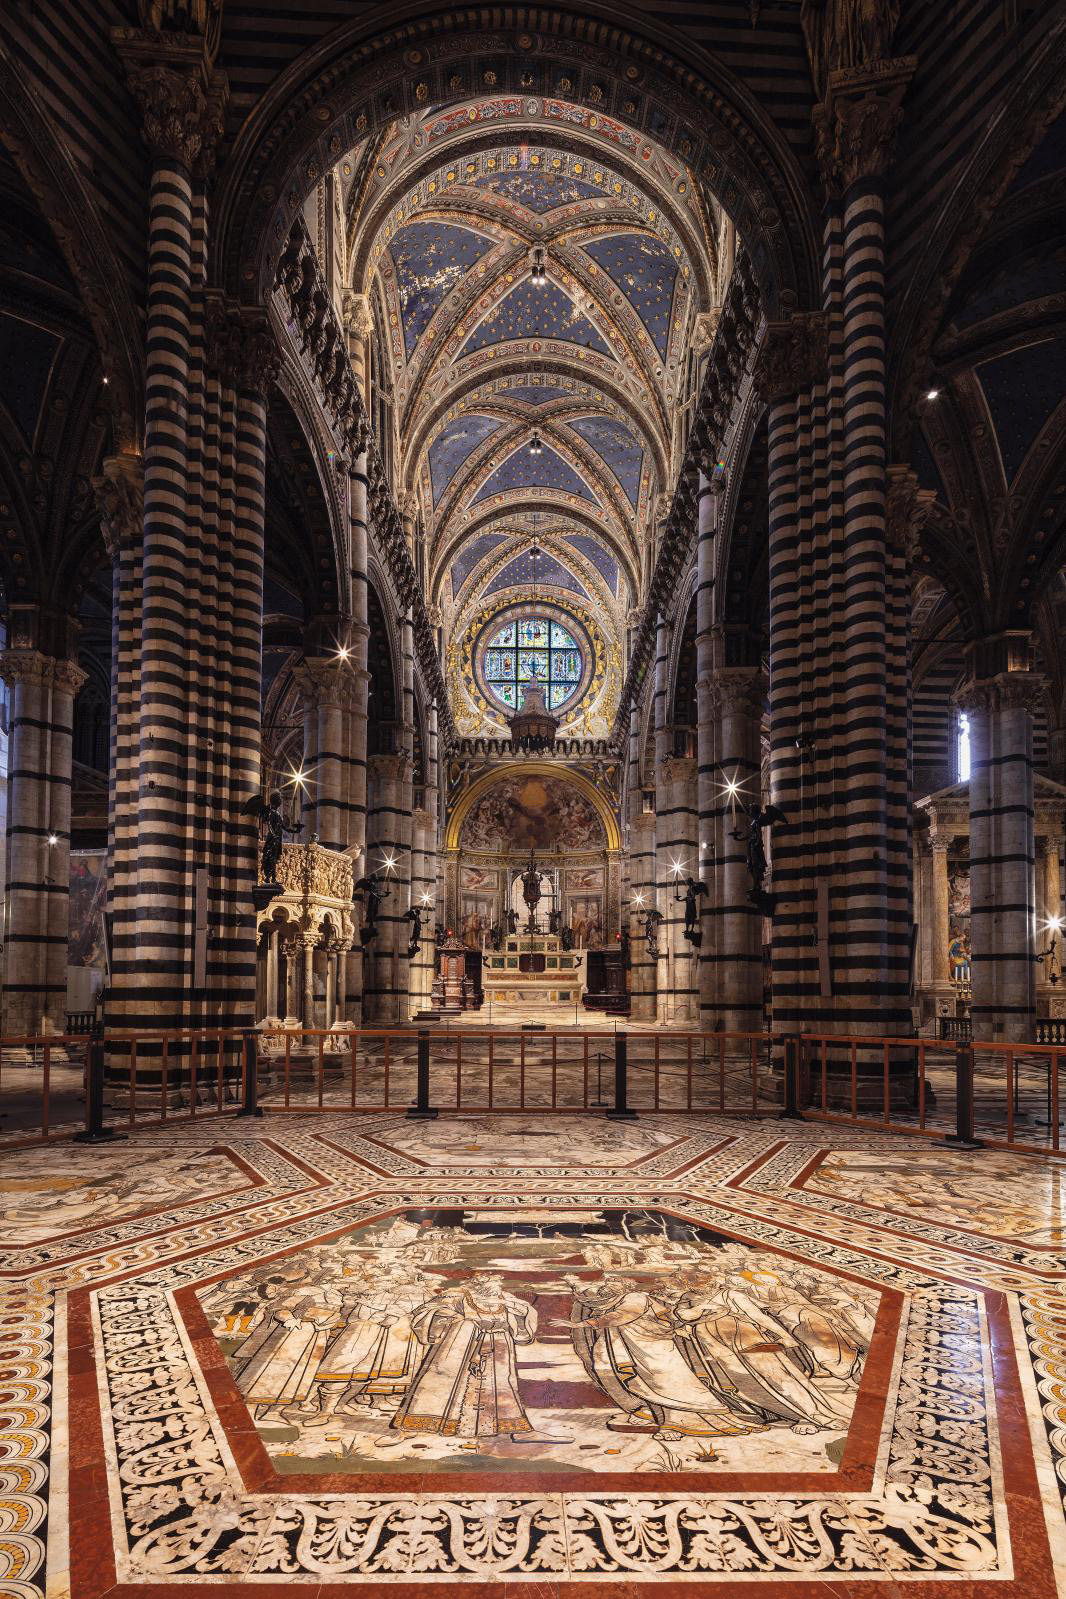 The Amazing Marble Floor of the Siena Duomo 